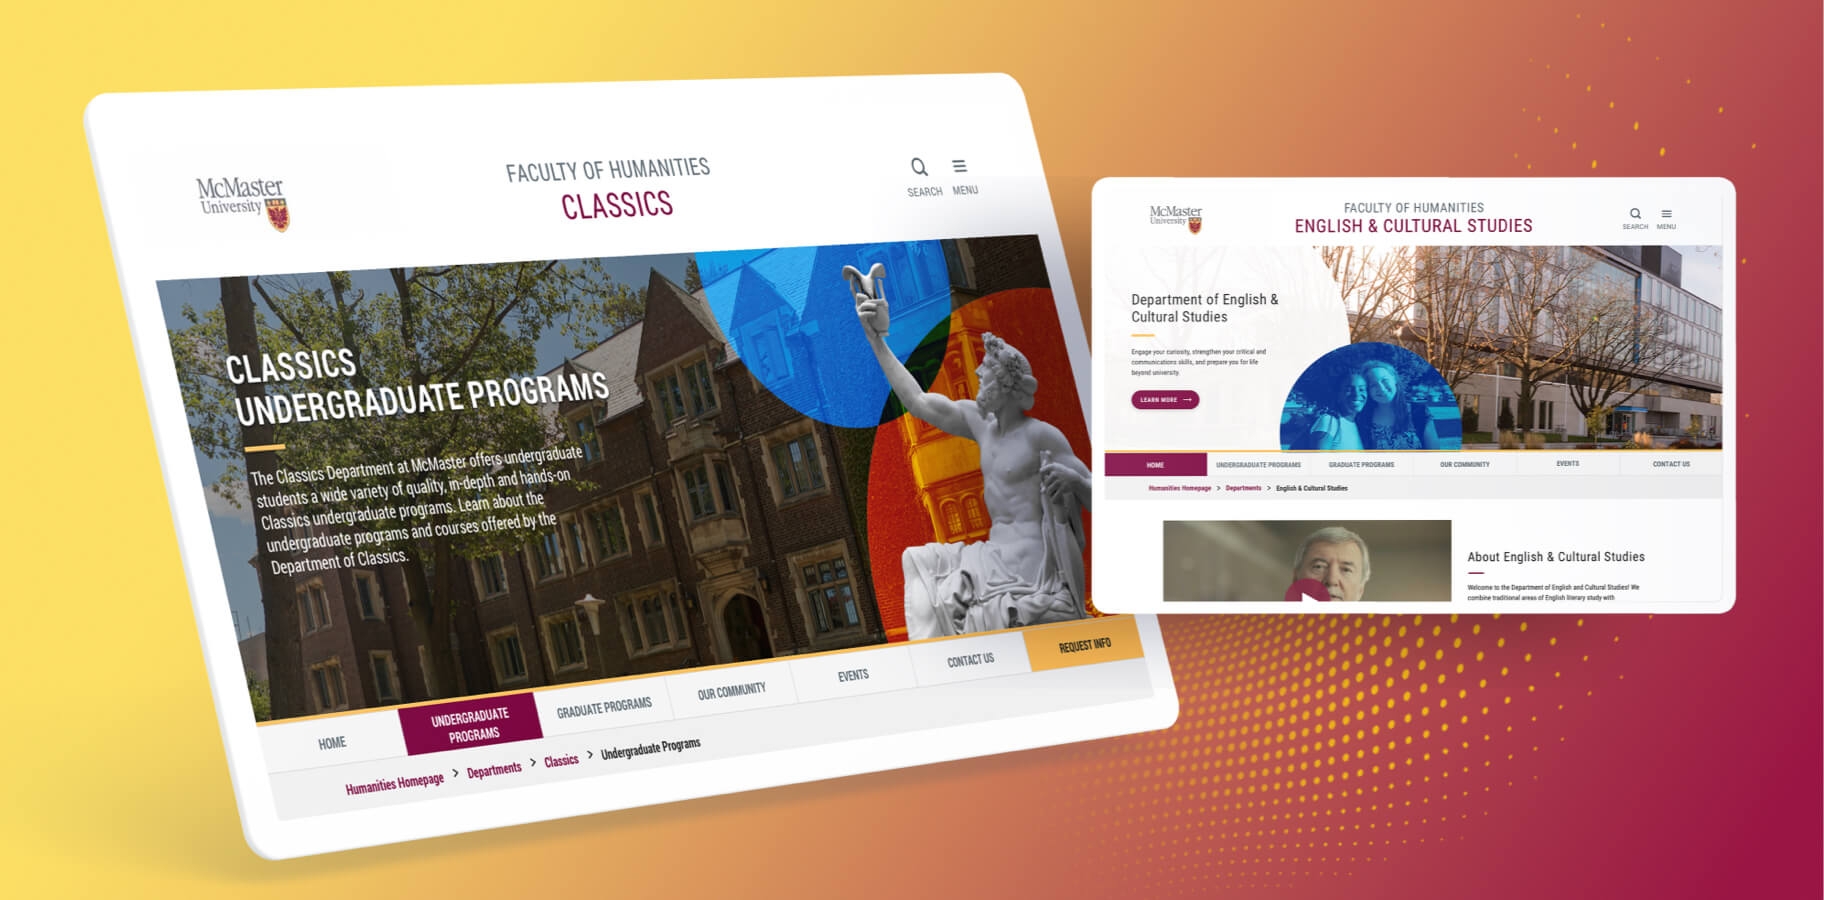 McMaster University’s Faculty of Humanities website that Elite Digital created on desktop.